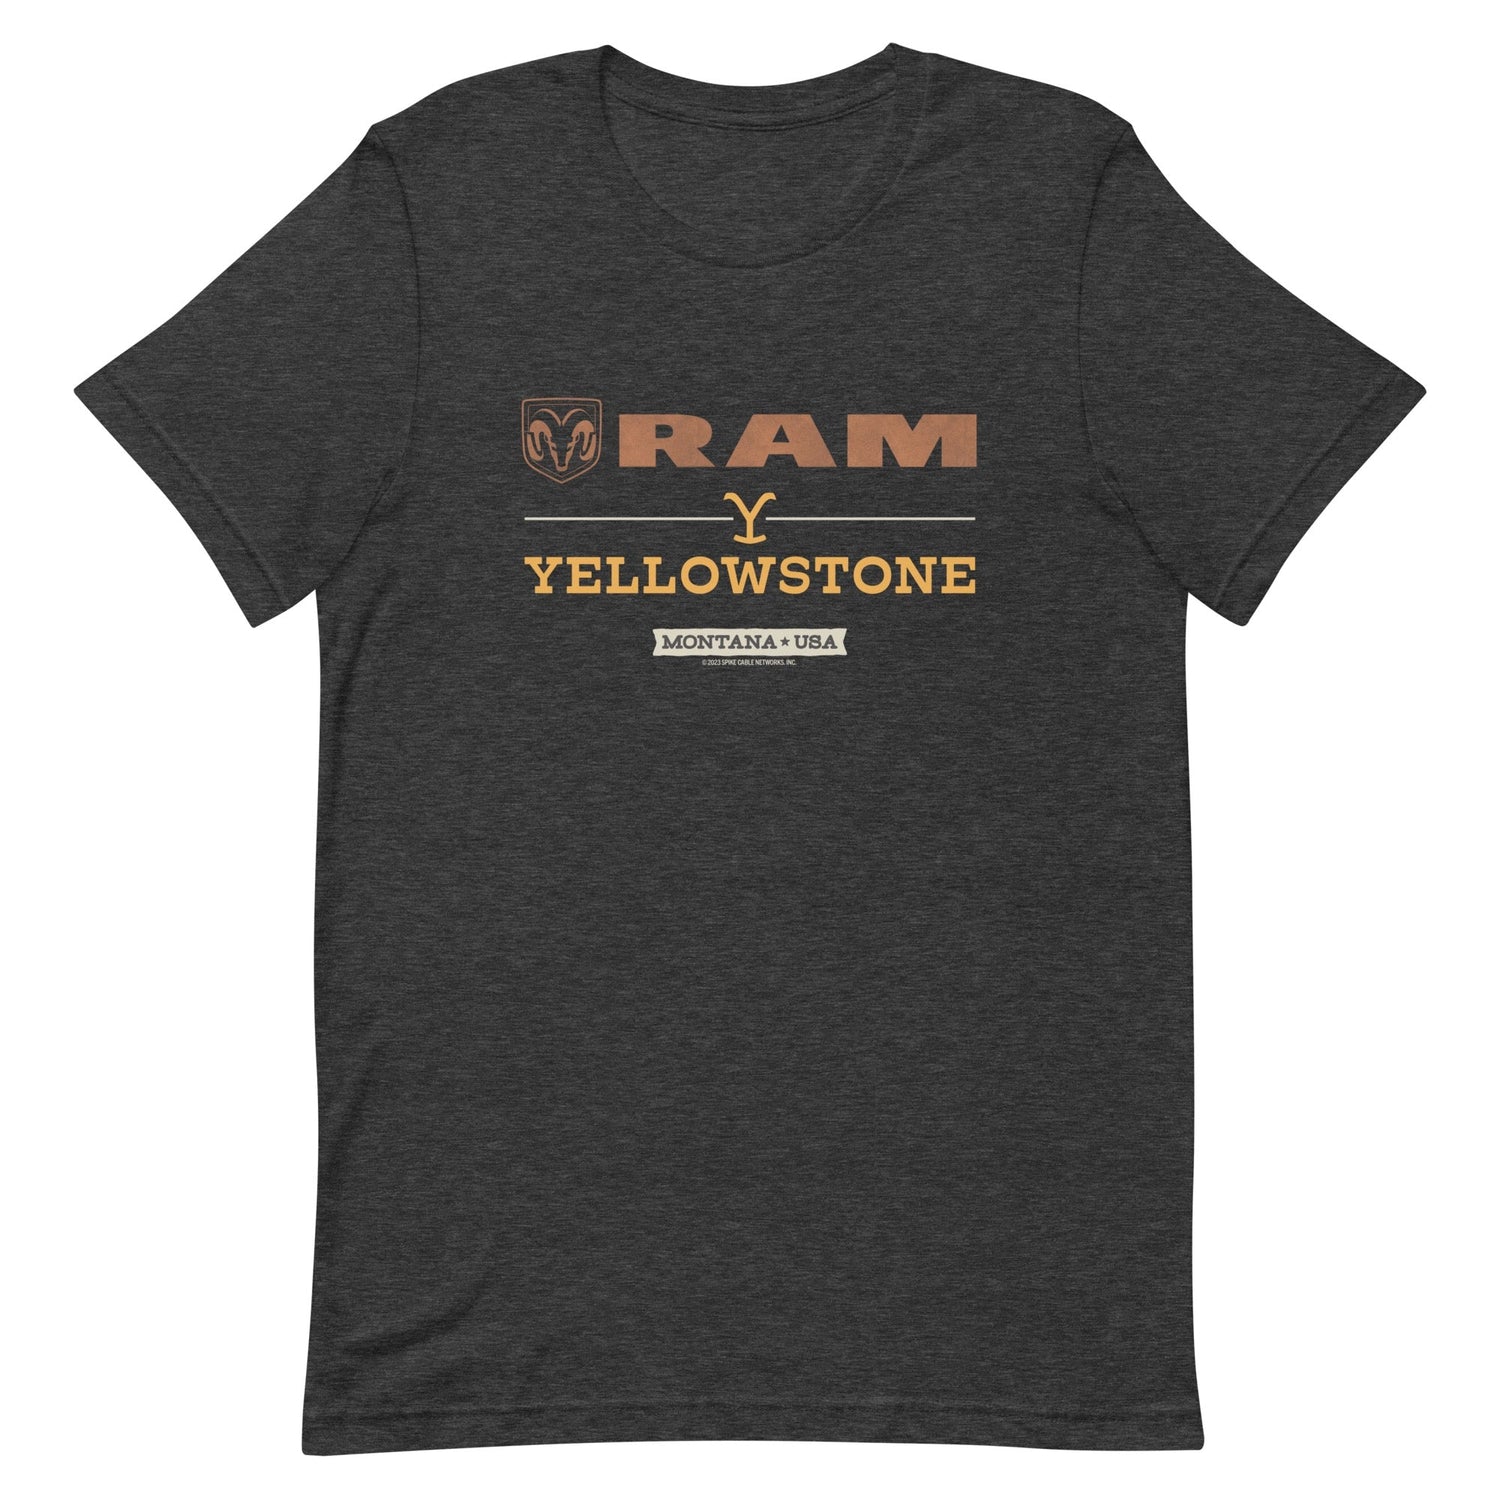 Yellowstone x Ram T - Shirt - Paramount Shop